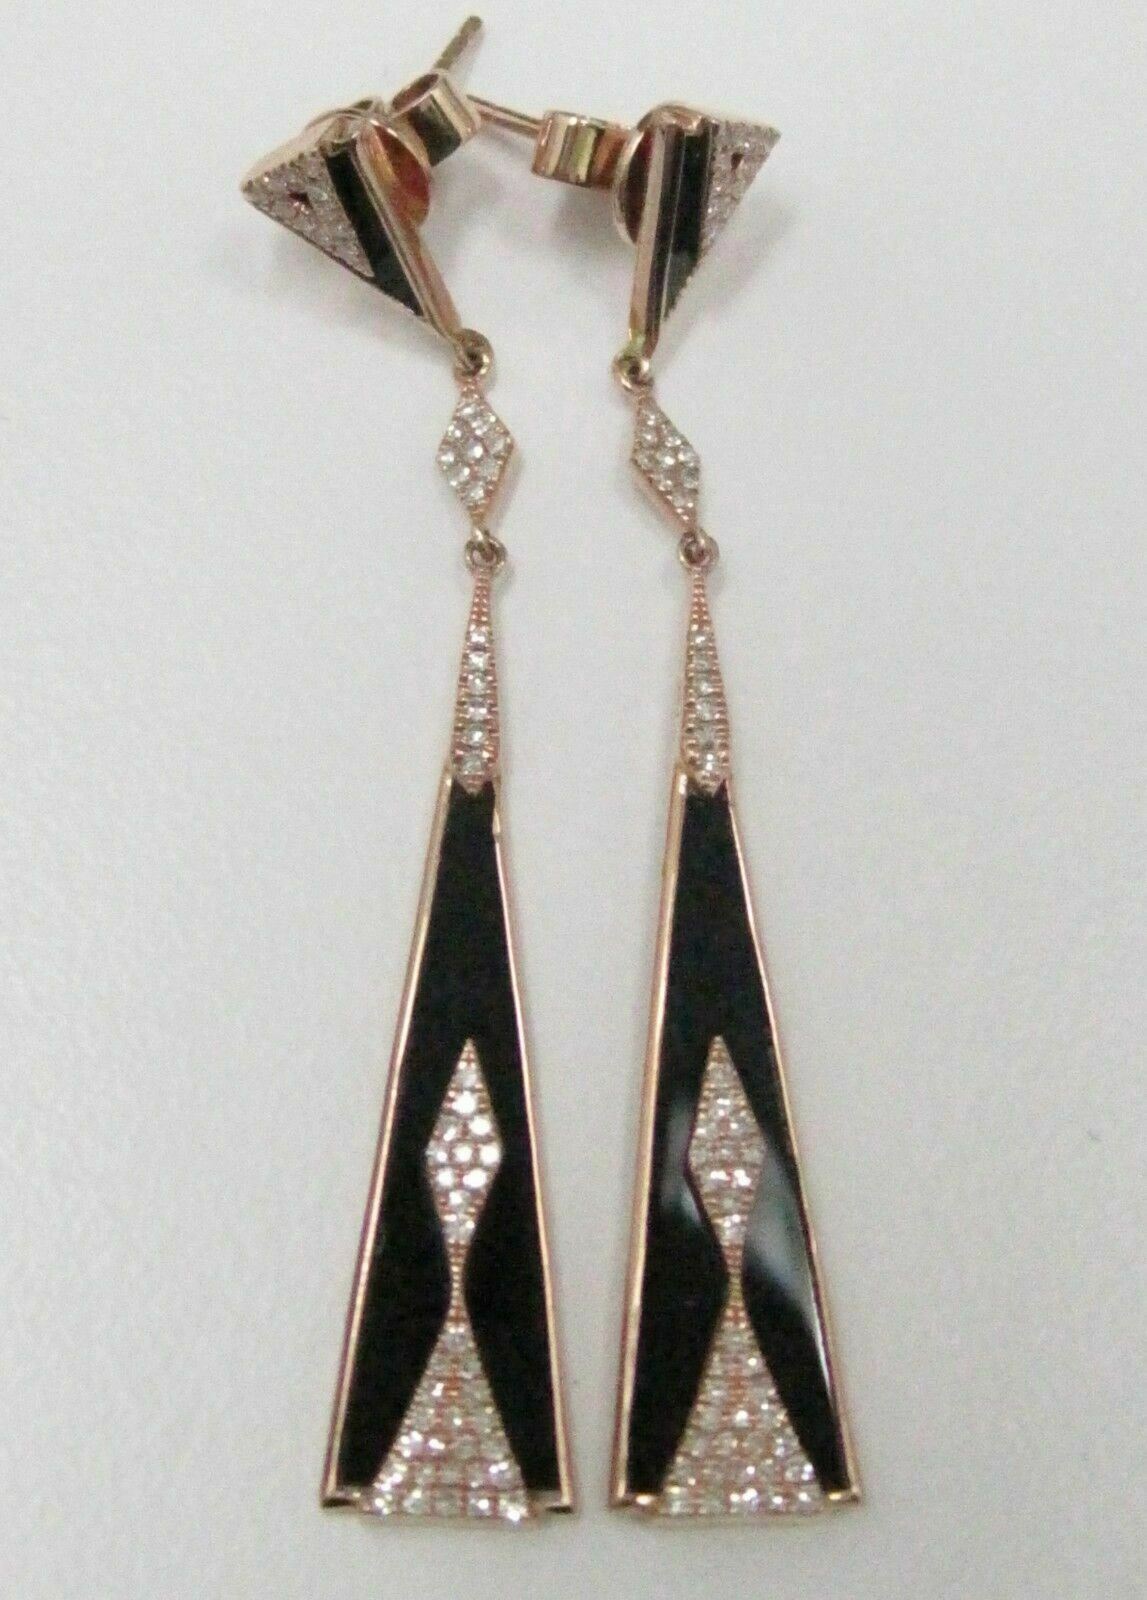 .35 TCW Natural Elongated BLACK ONYX Diamond Dangle Earrings 14kt Rose Gold